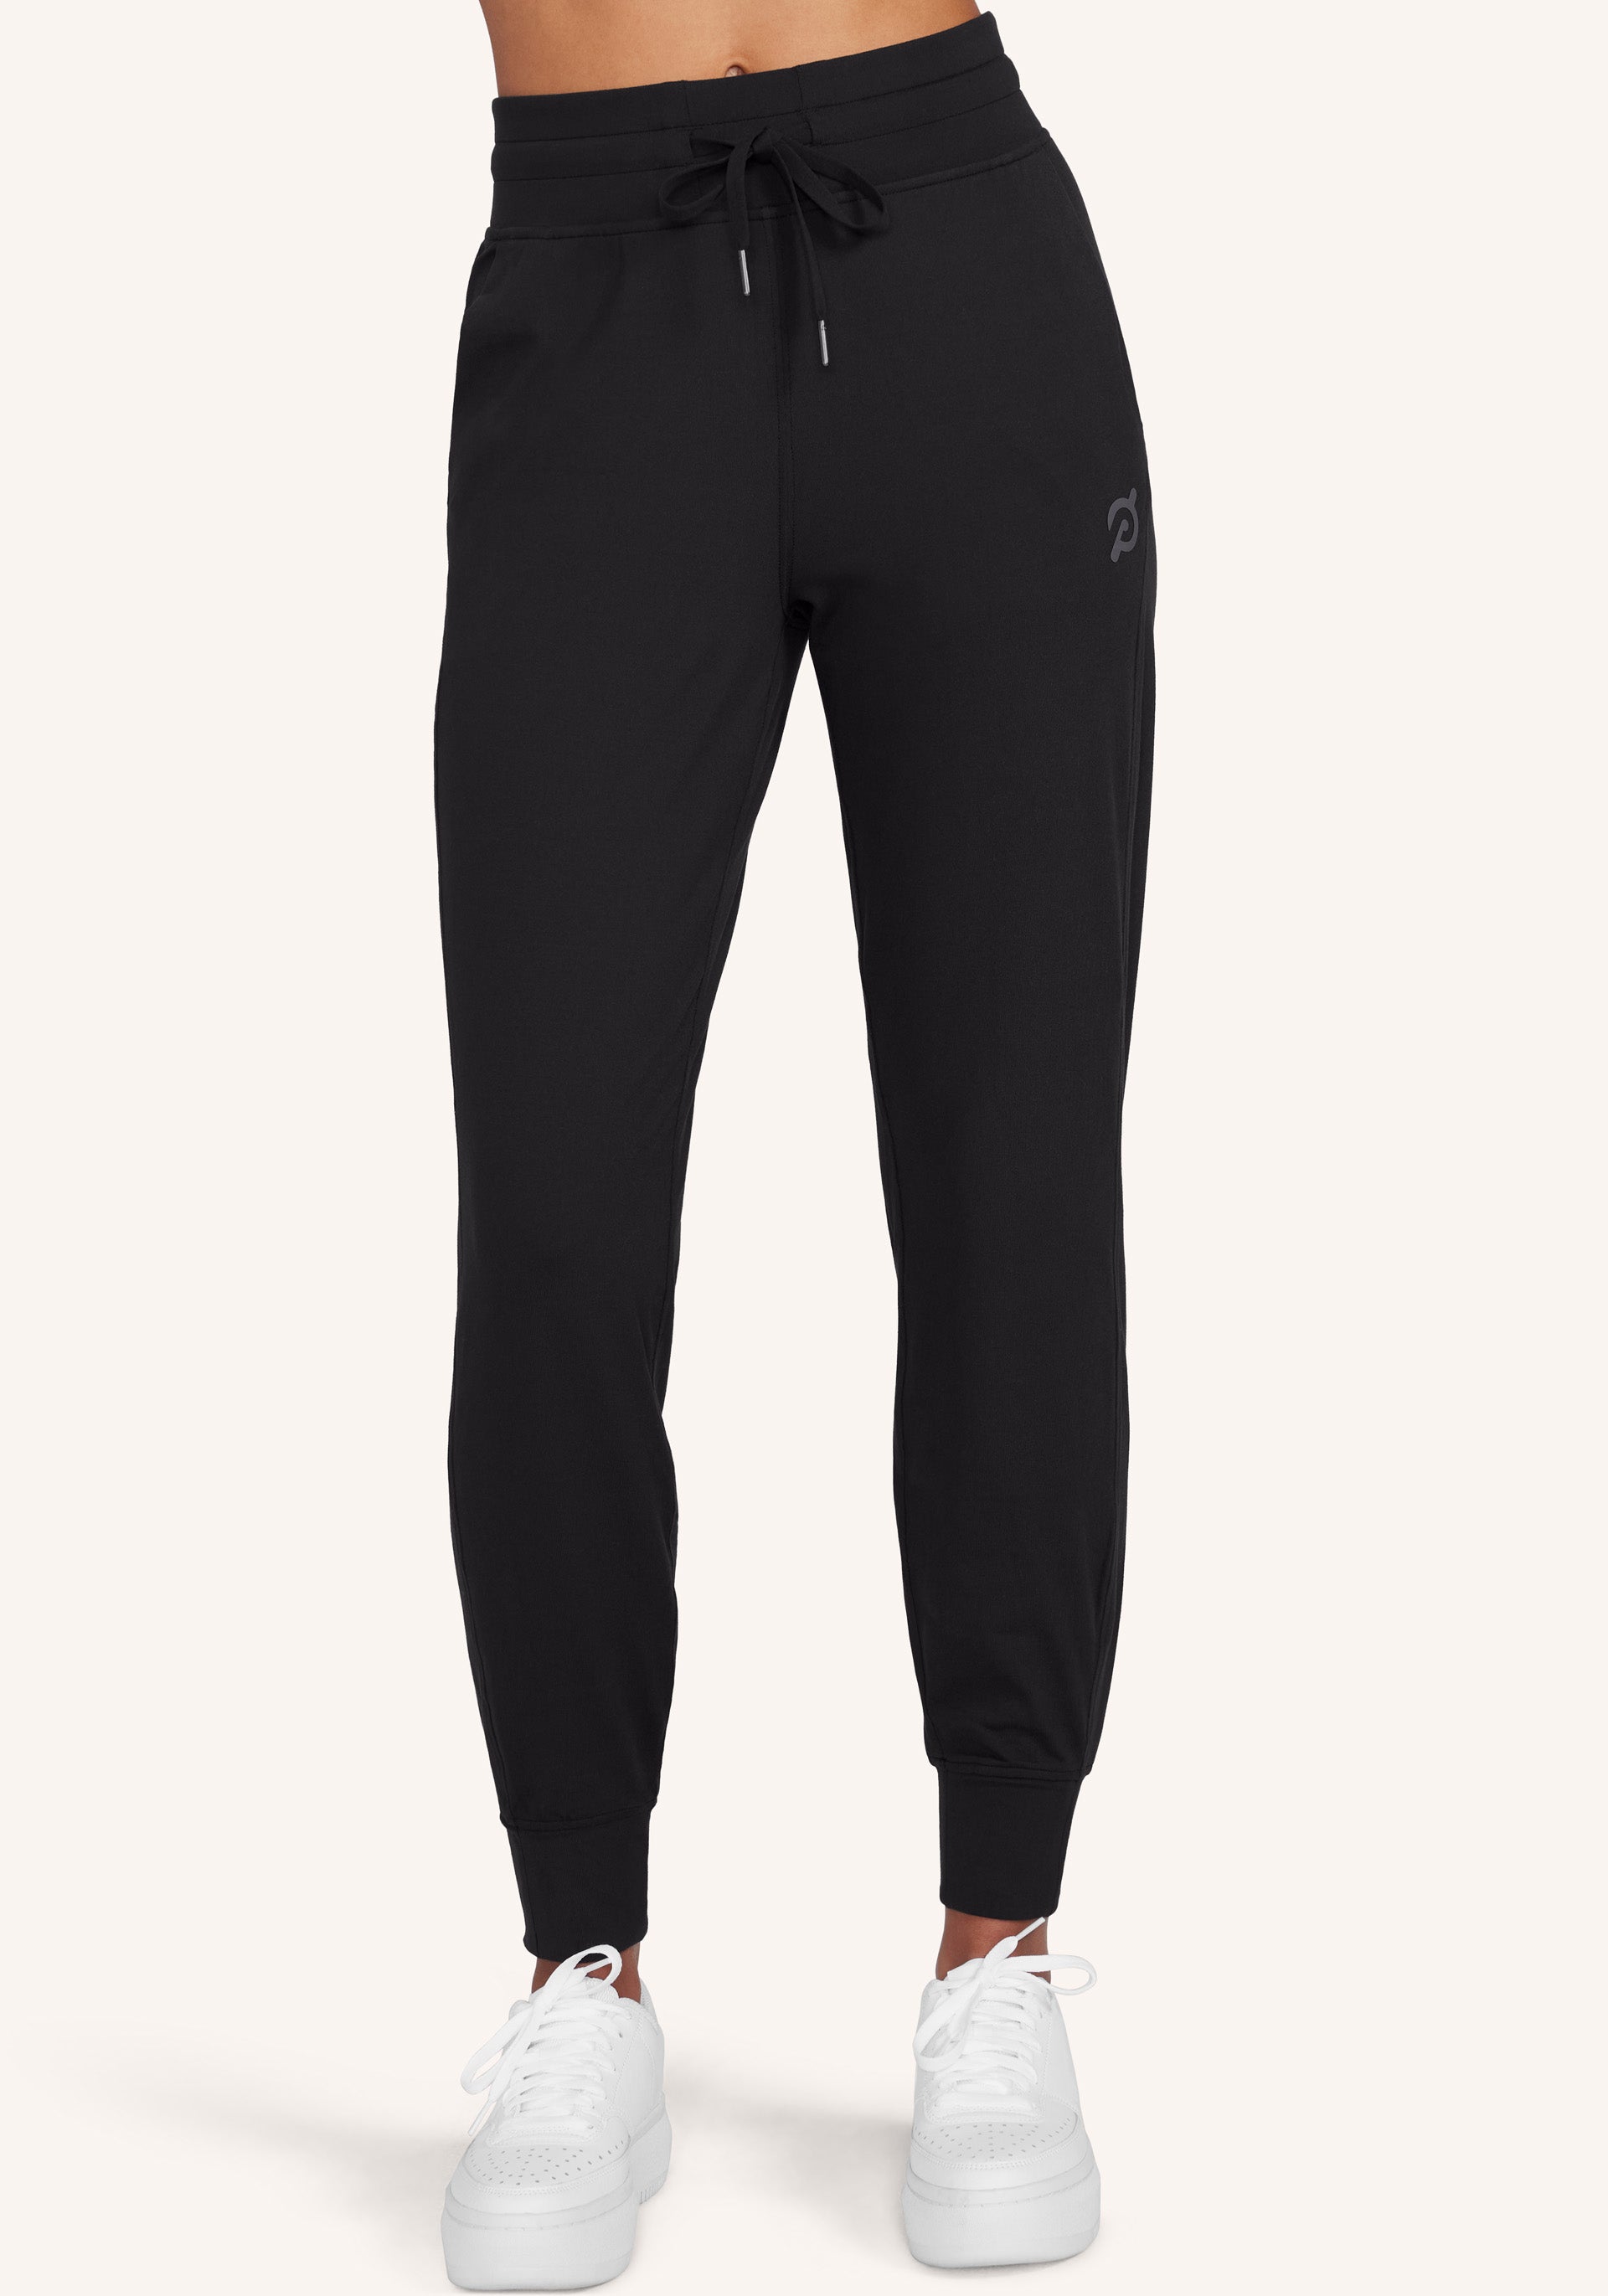 Lululemon Black Jogger Pants with inner lining Size 6